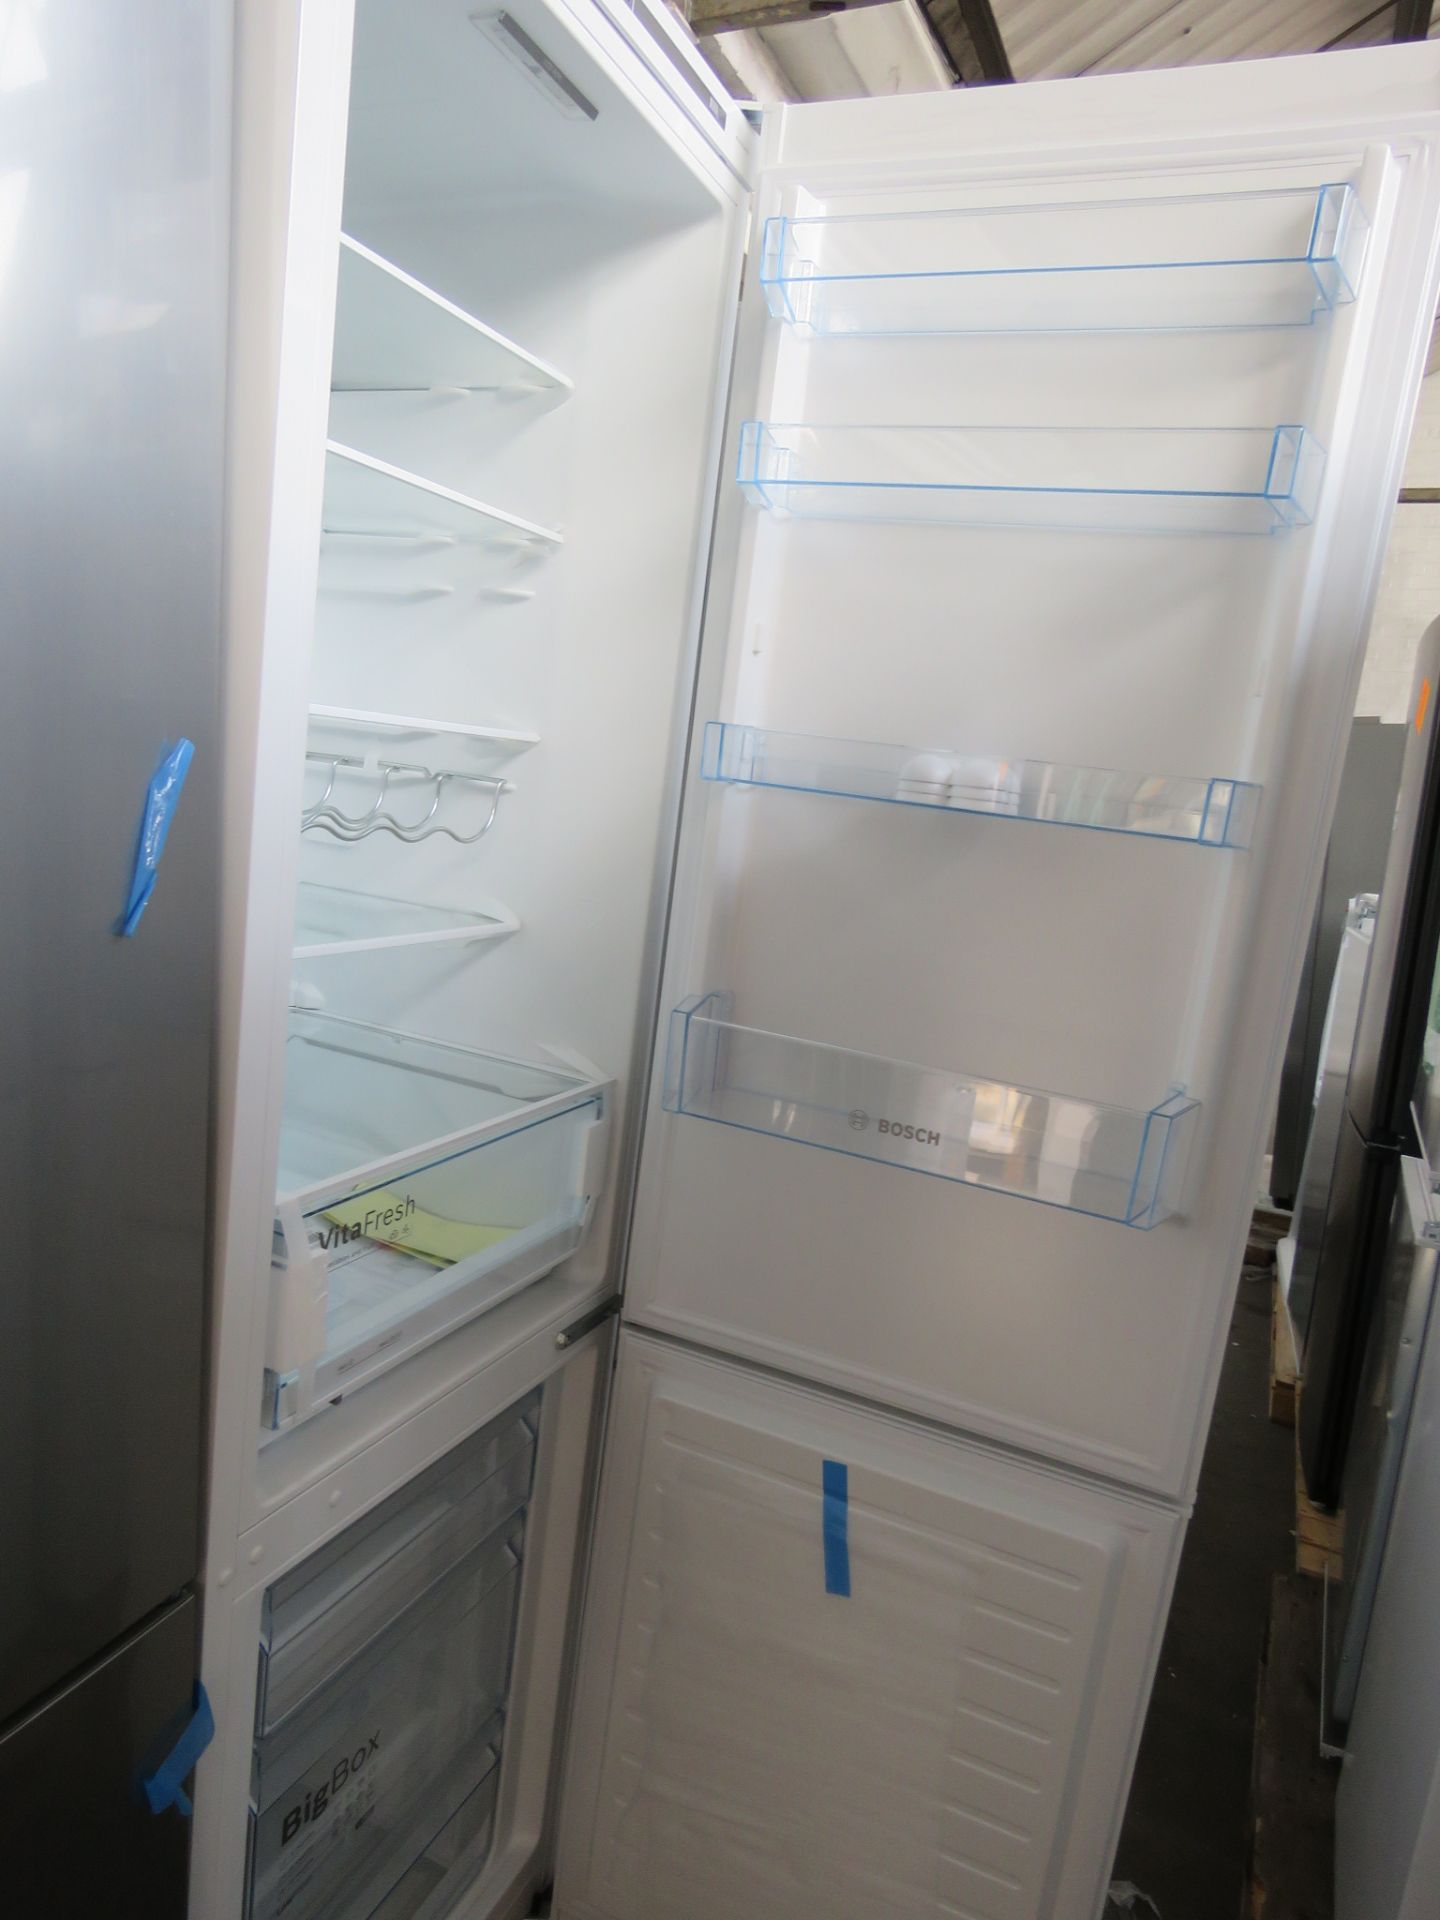 KGV39VWEAGB Bosch Free-standing fridge-freezer - Image 2 of 2